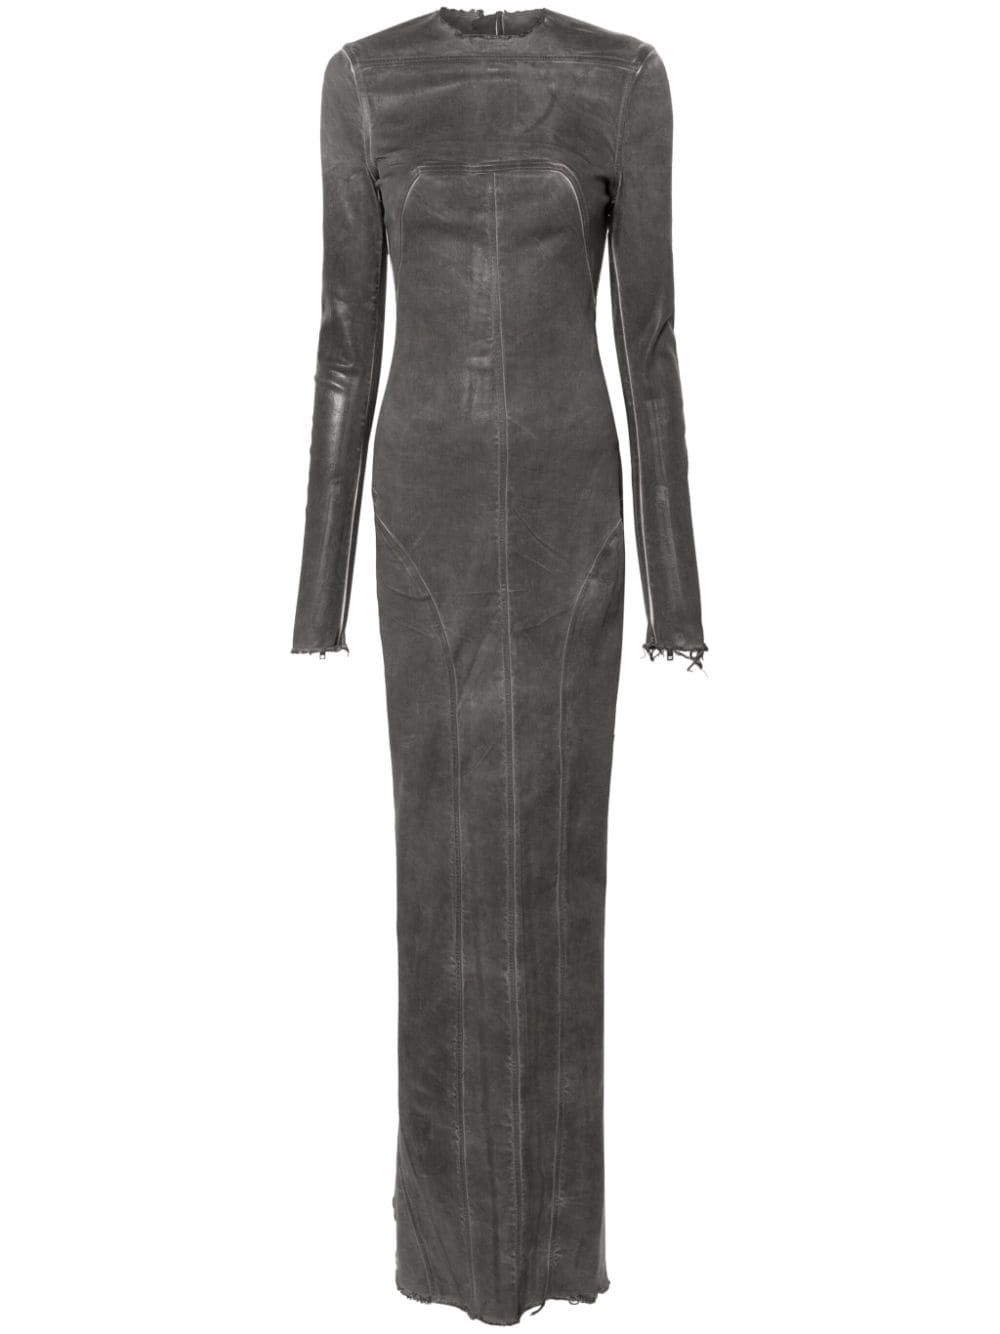 RICK OWENS Grey Long Denim Dress | Gunmetal Cotton Blend | Frayed Hem | Fitted Waist | Floor-Length